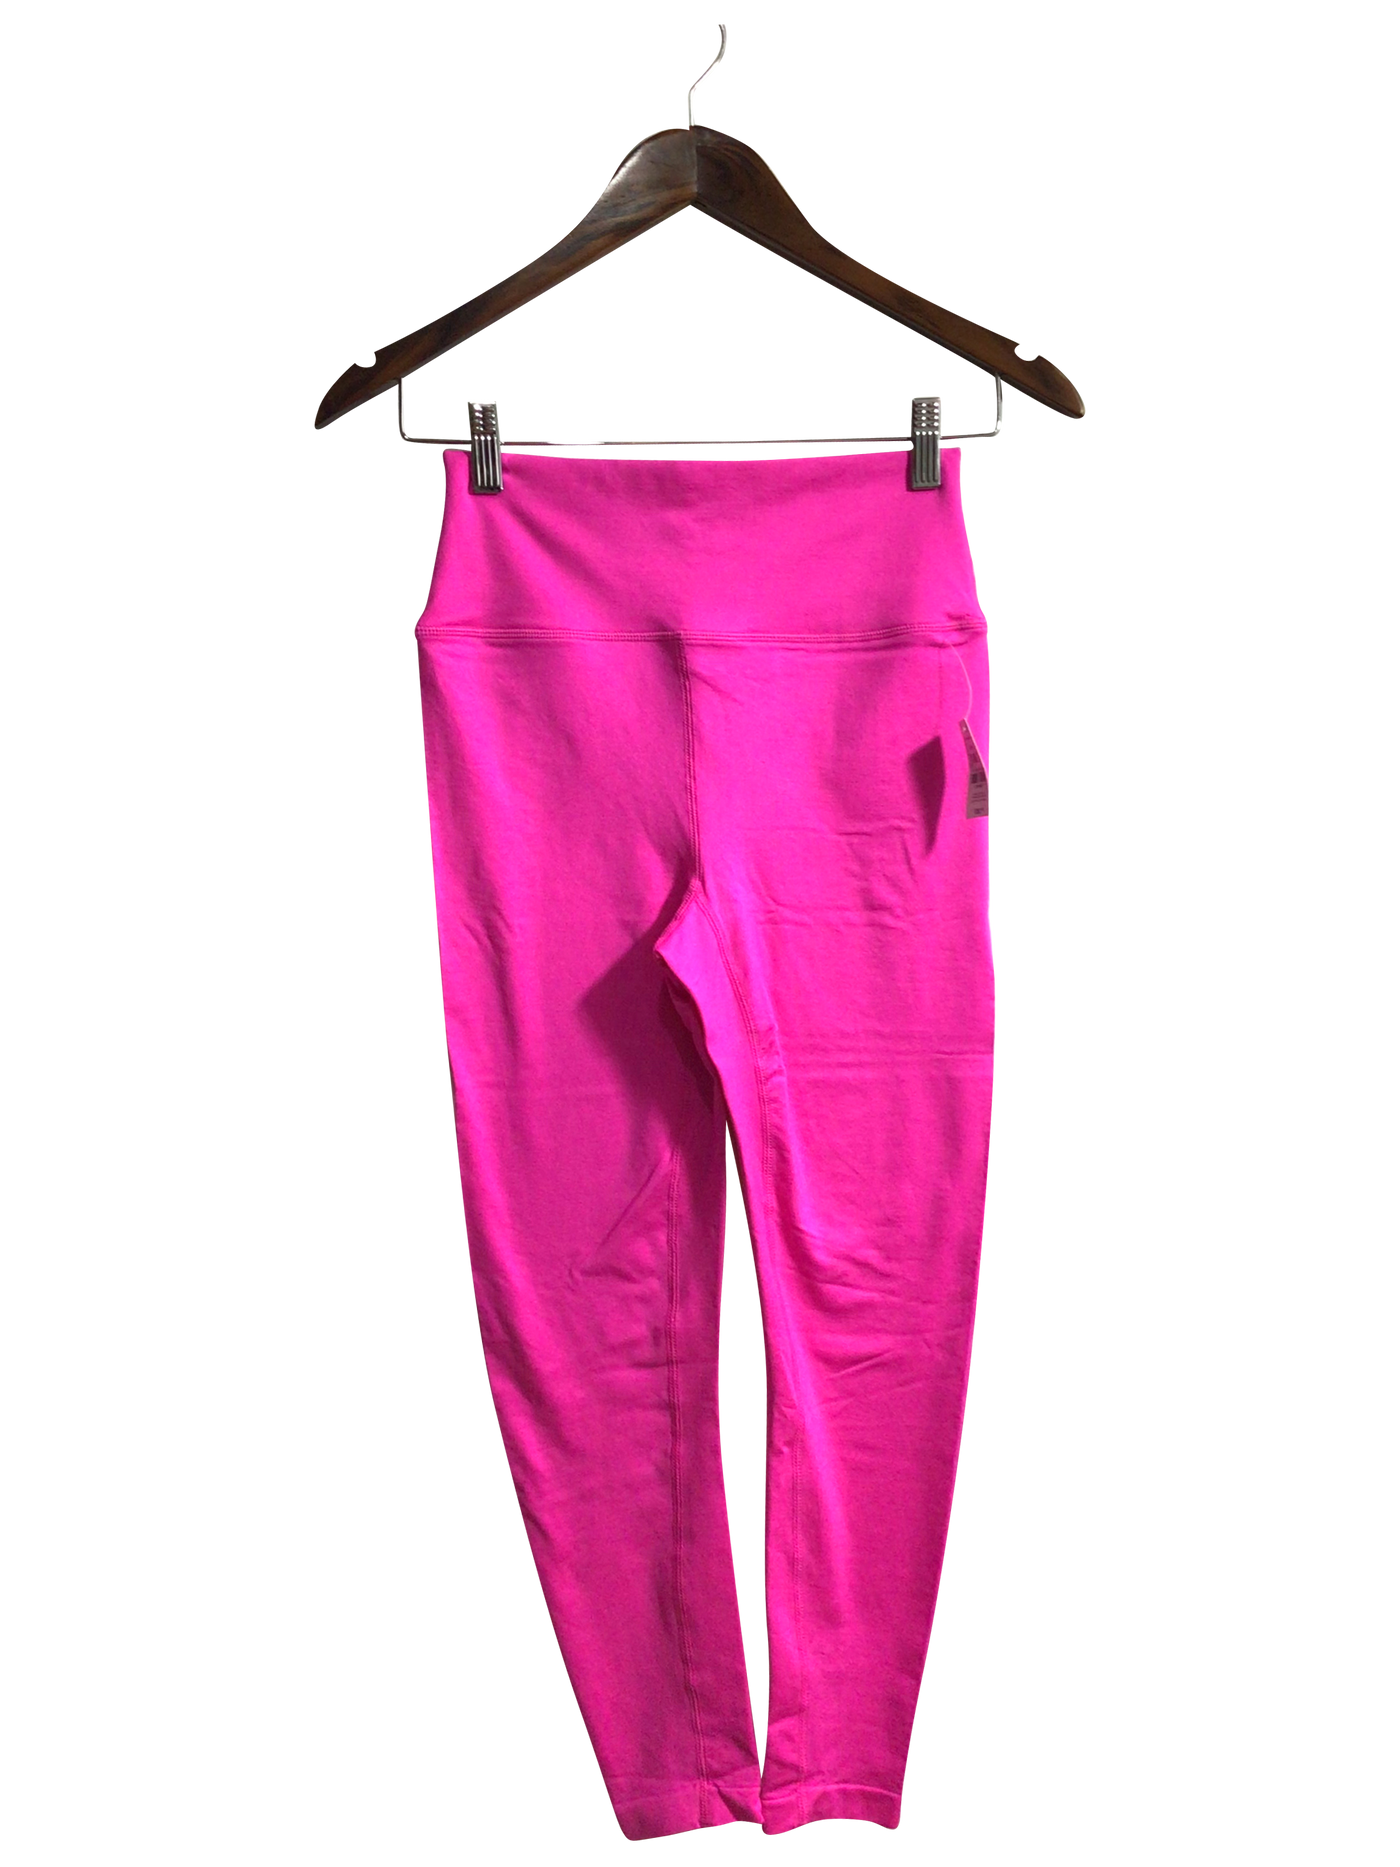 KGMTL Women Activewear Leggings Regular fit in Pink - Size M | 10.9 $ KOOP